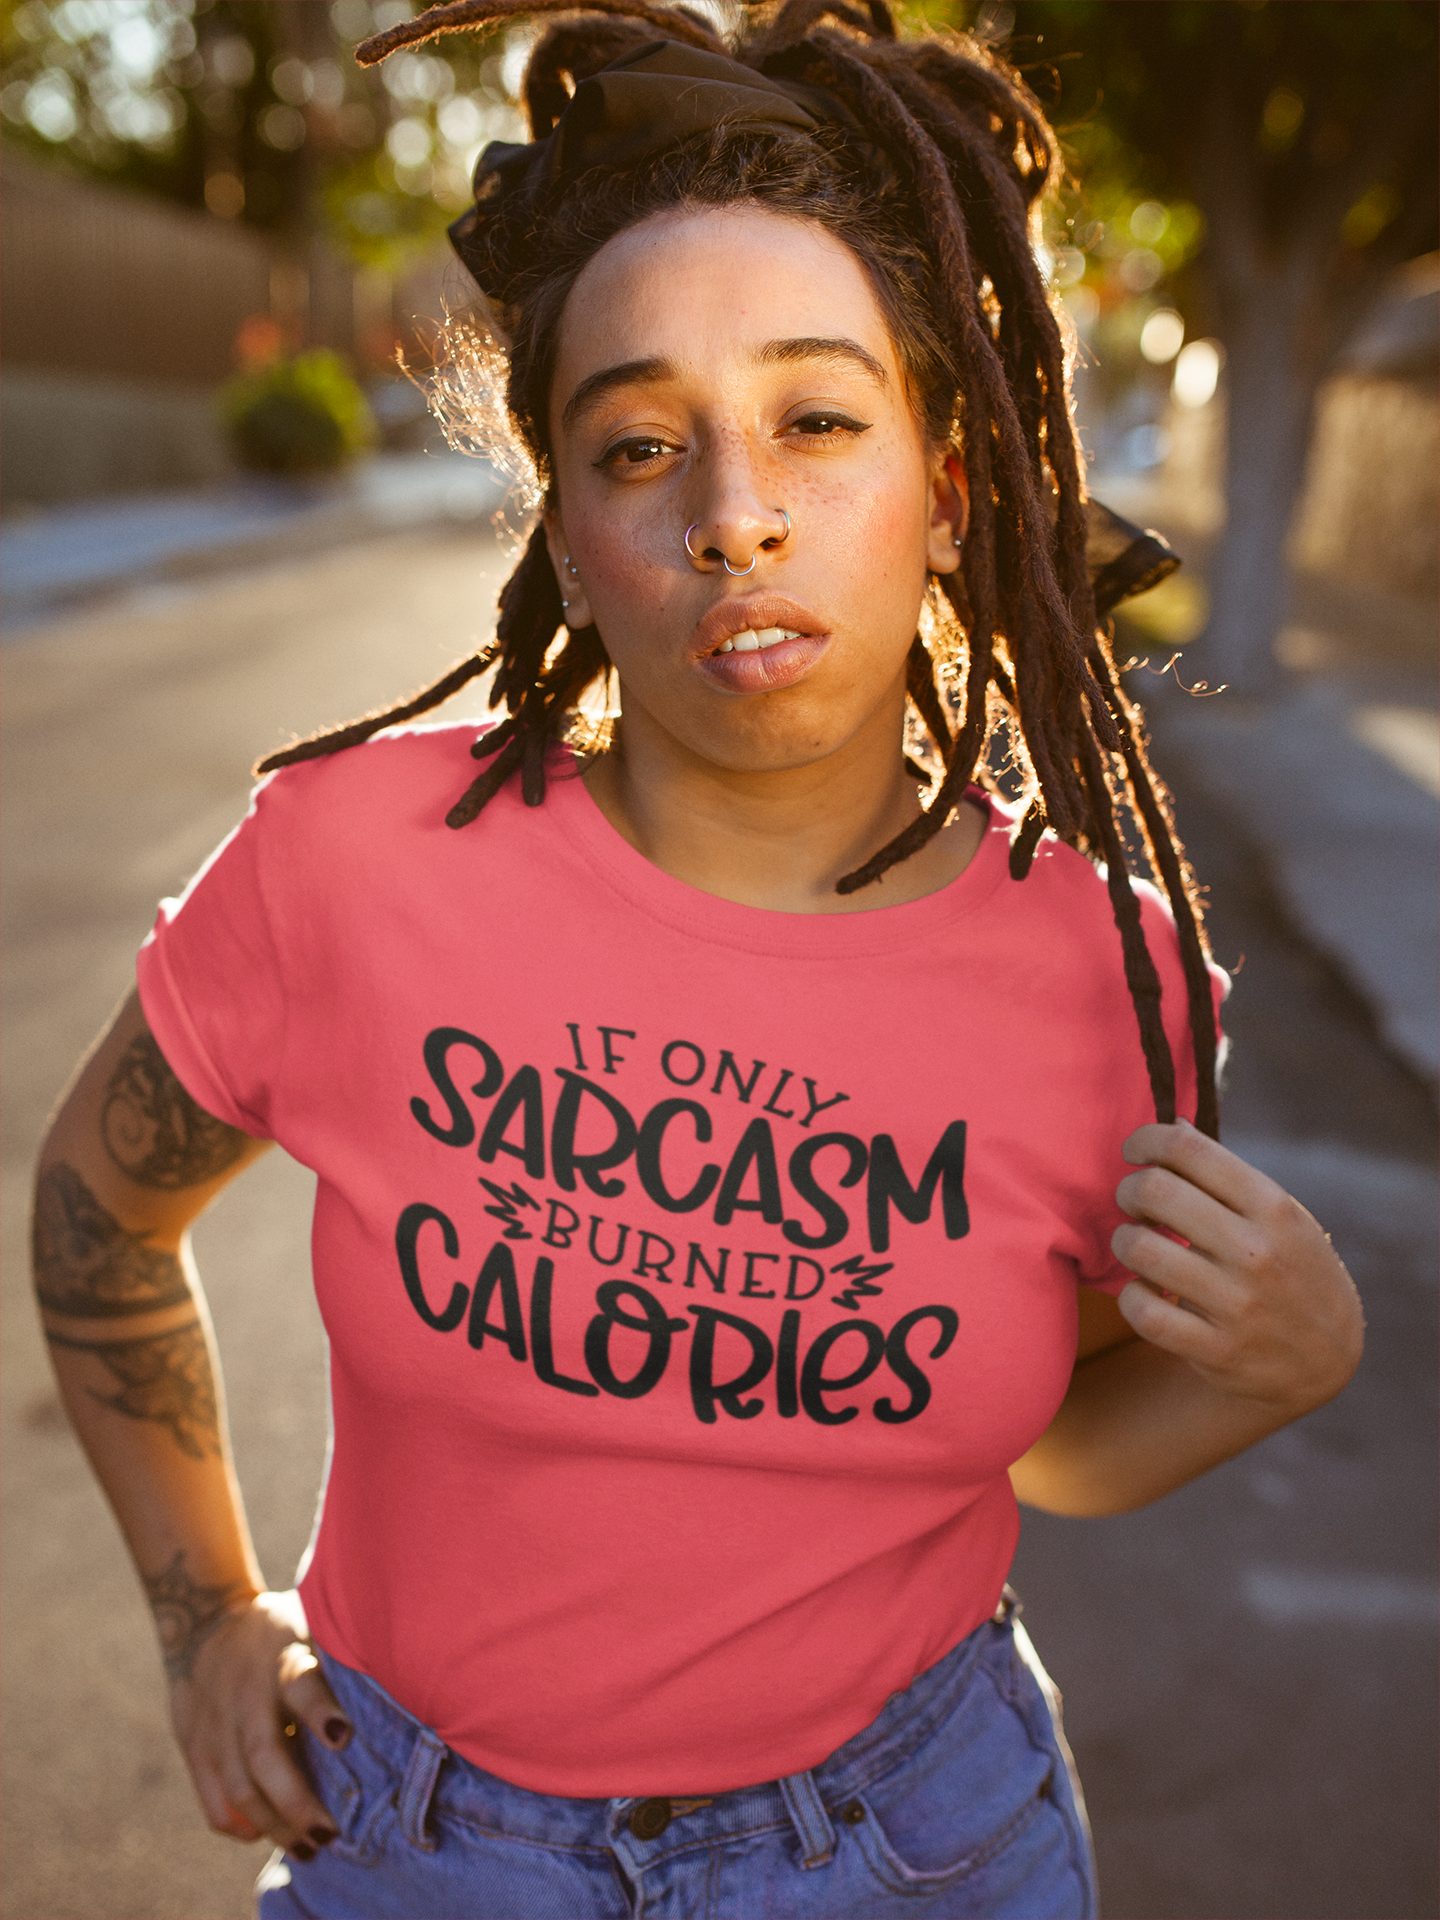 "SARCASM & CALORIES" Talking Tee